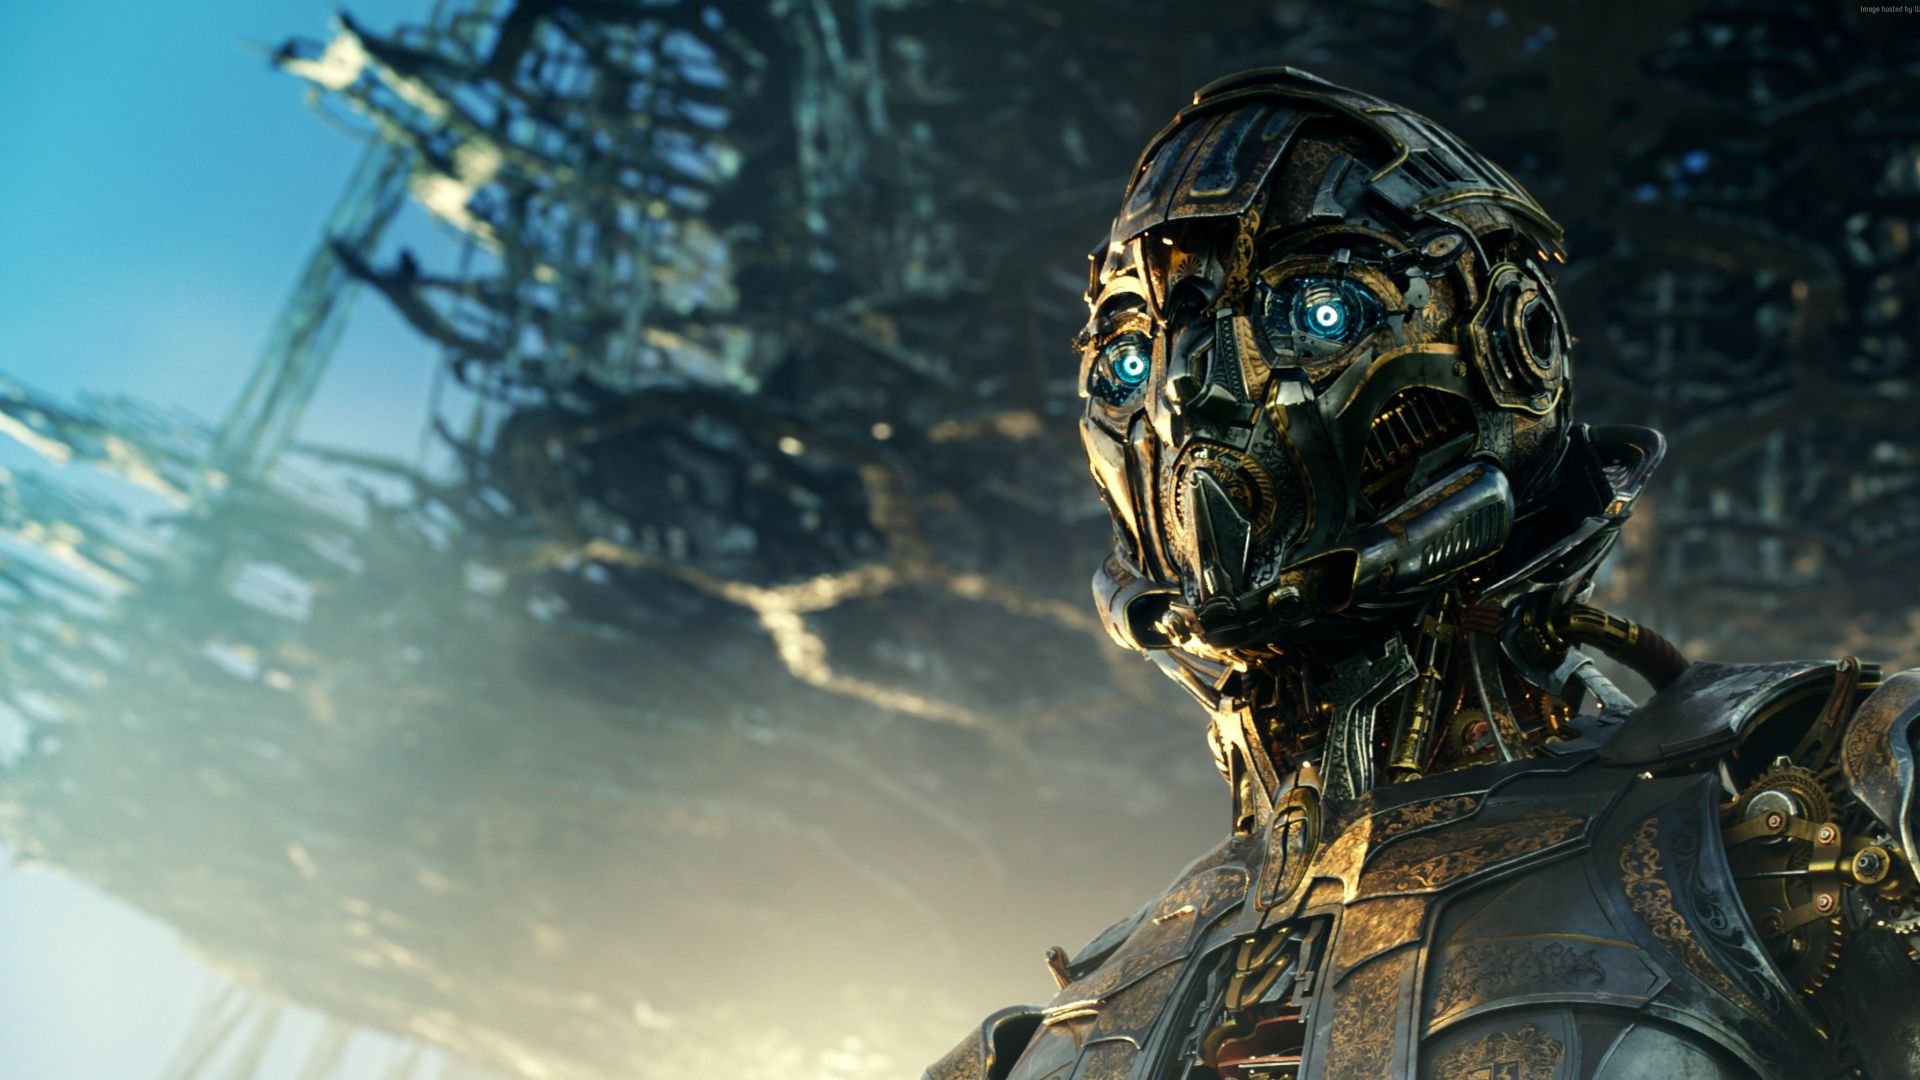 Wallpaper Transformers: the last knight, movie, robot, cyborg, 2017 movie